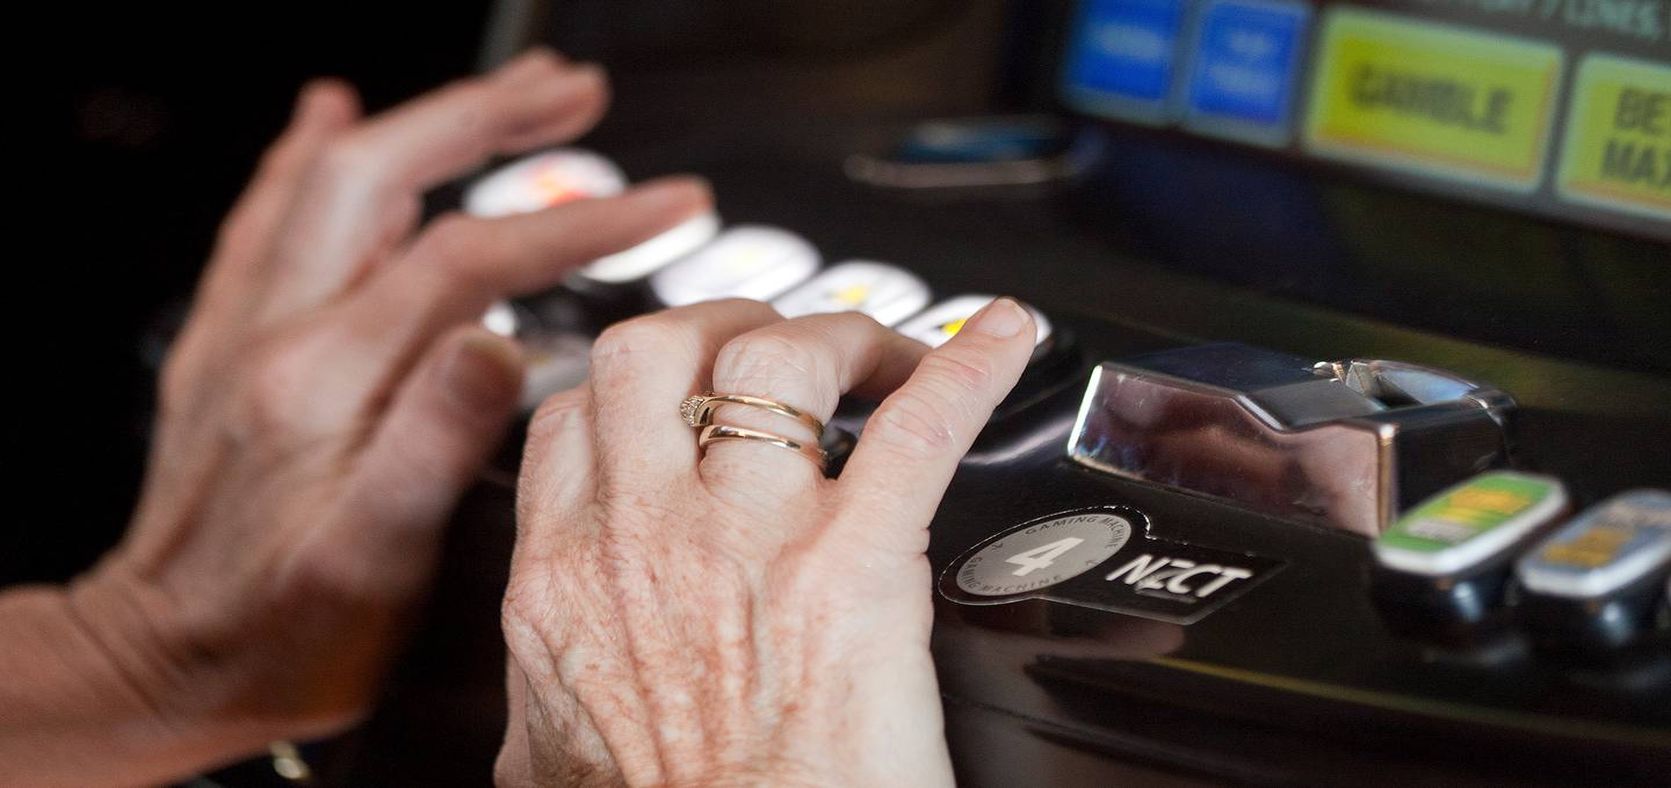 Kiwis Spent NZ.6 Billion Last Year On Gambling